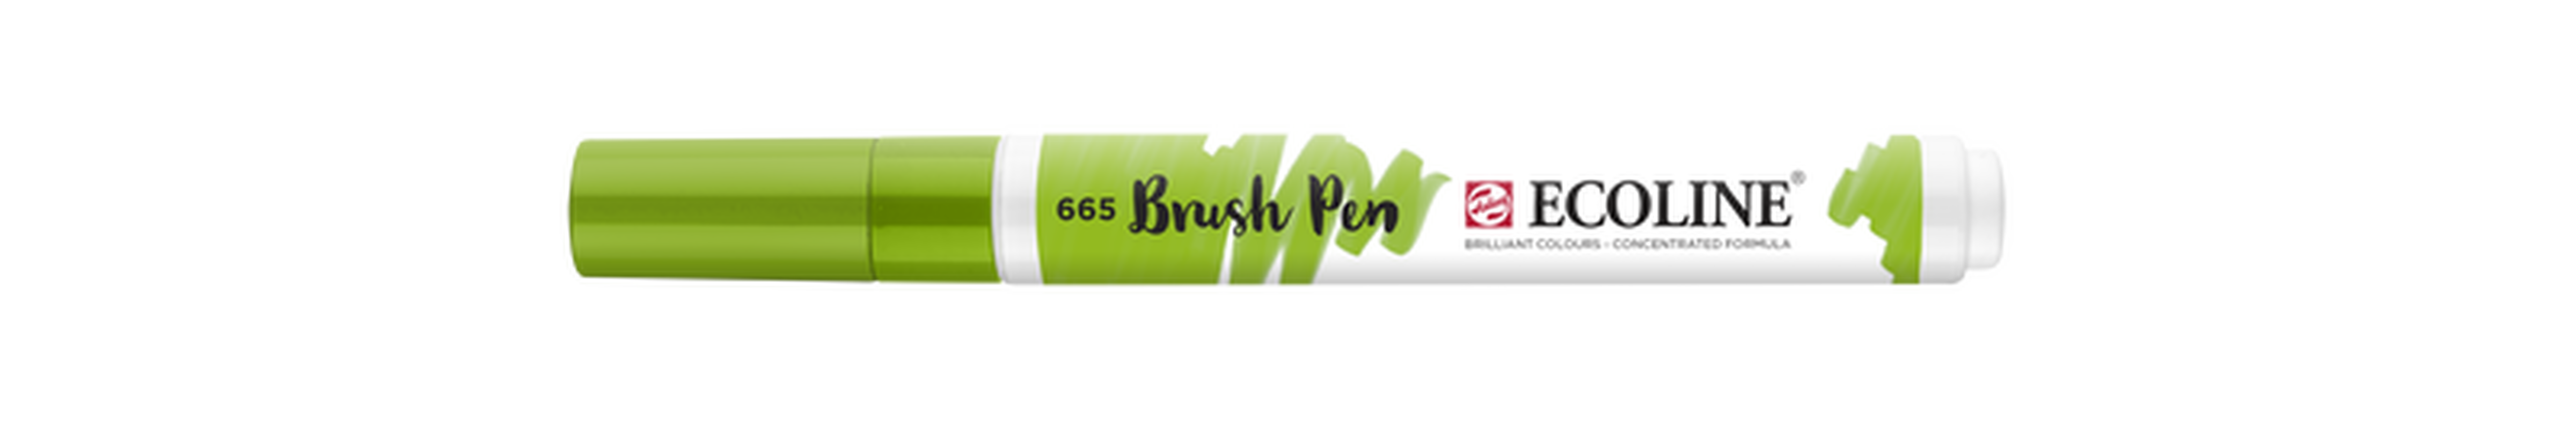 Talens Pinselstift Ecoline Nummer 665 Farbe Frühlingsgrün